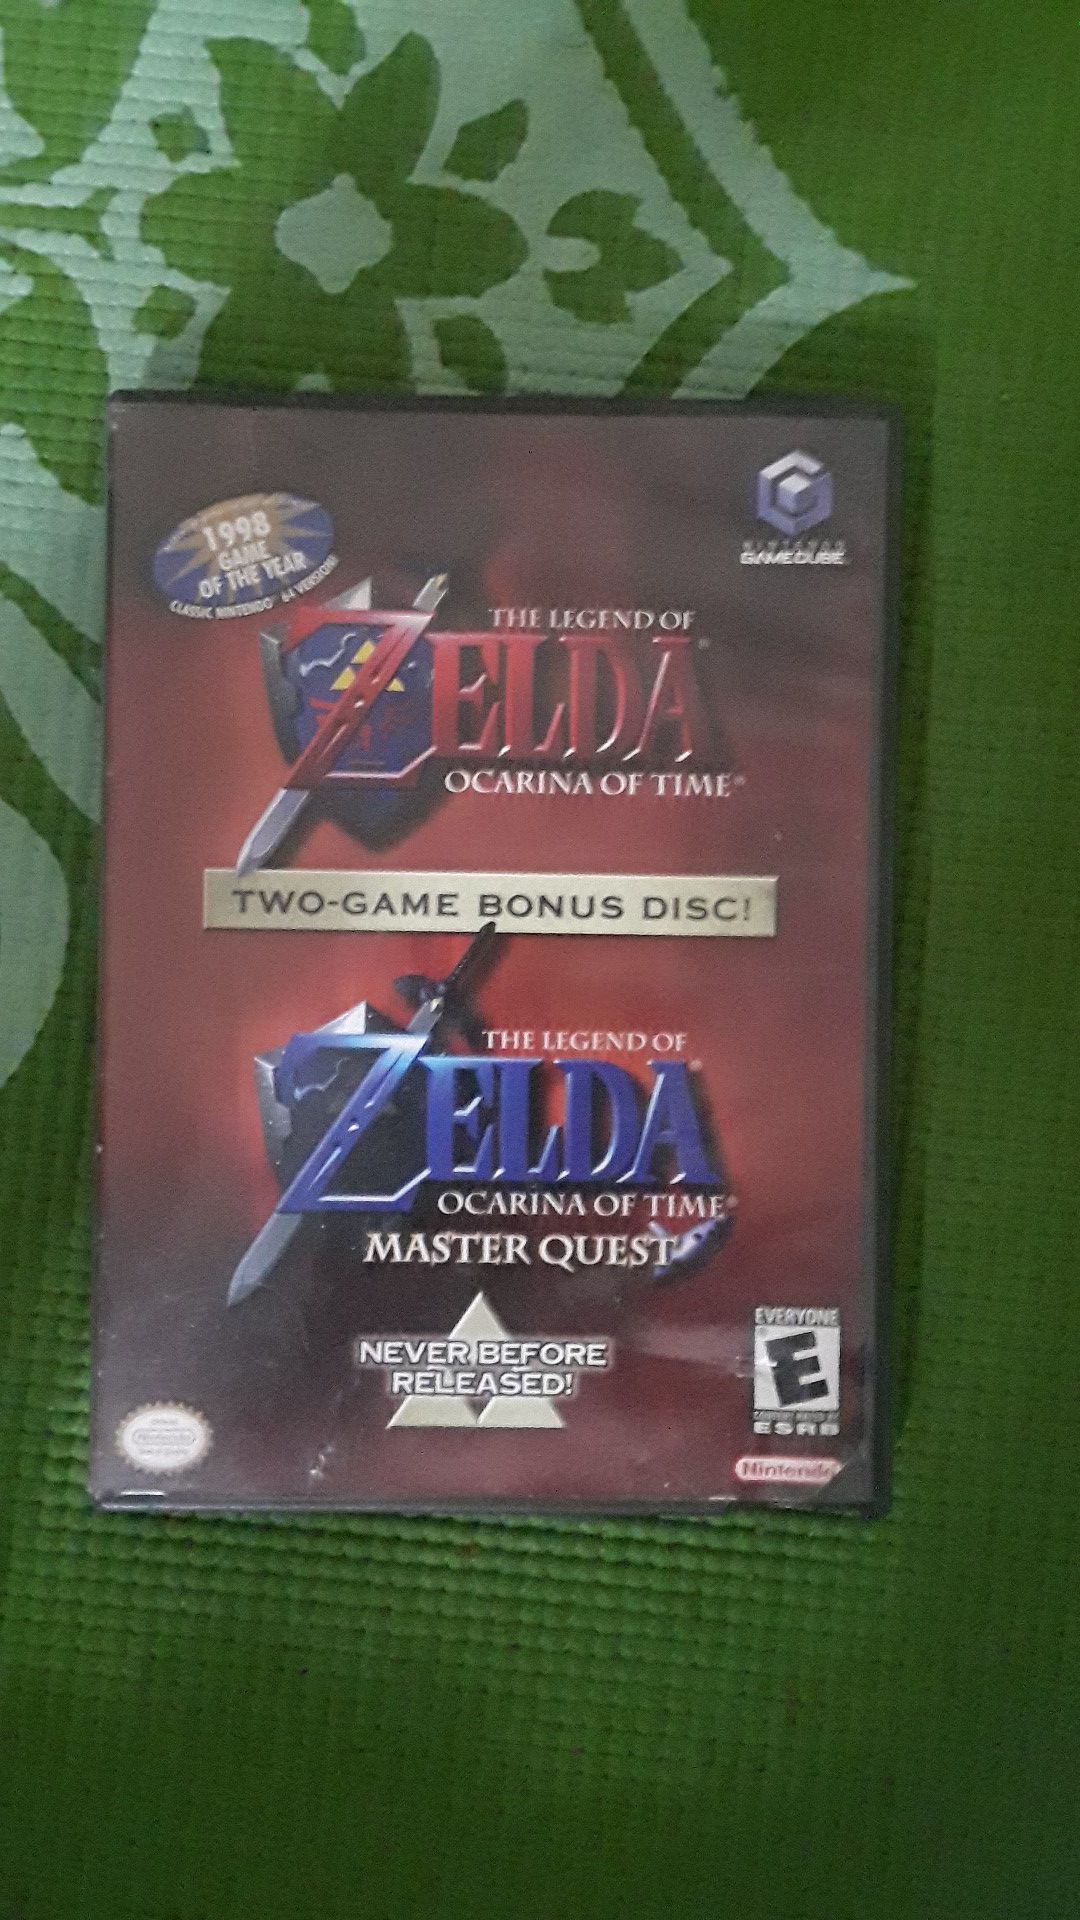 The Legend of Zelda Ocarina of Time (Two-Game Bonus Disc!) - The